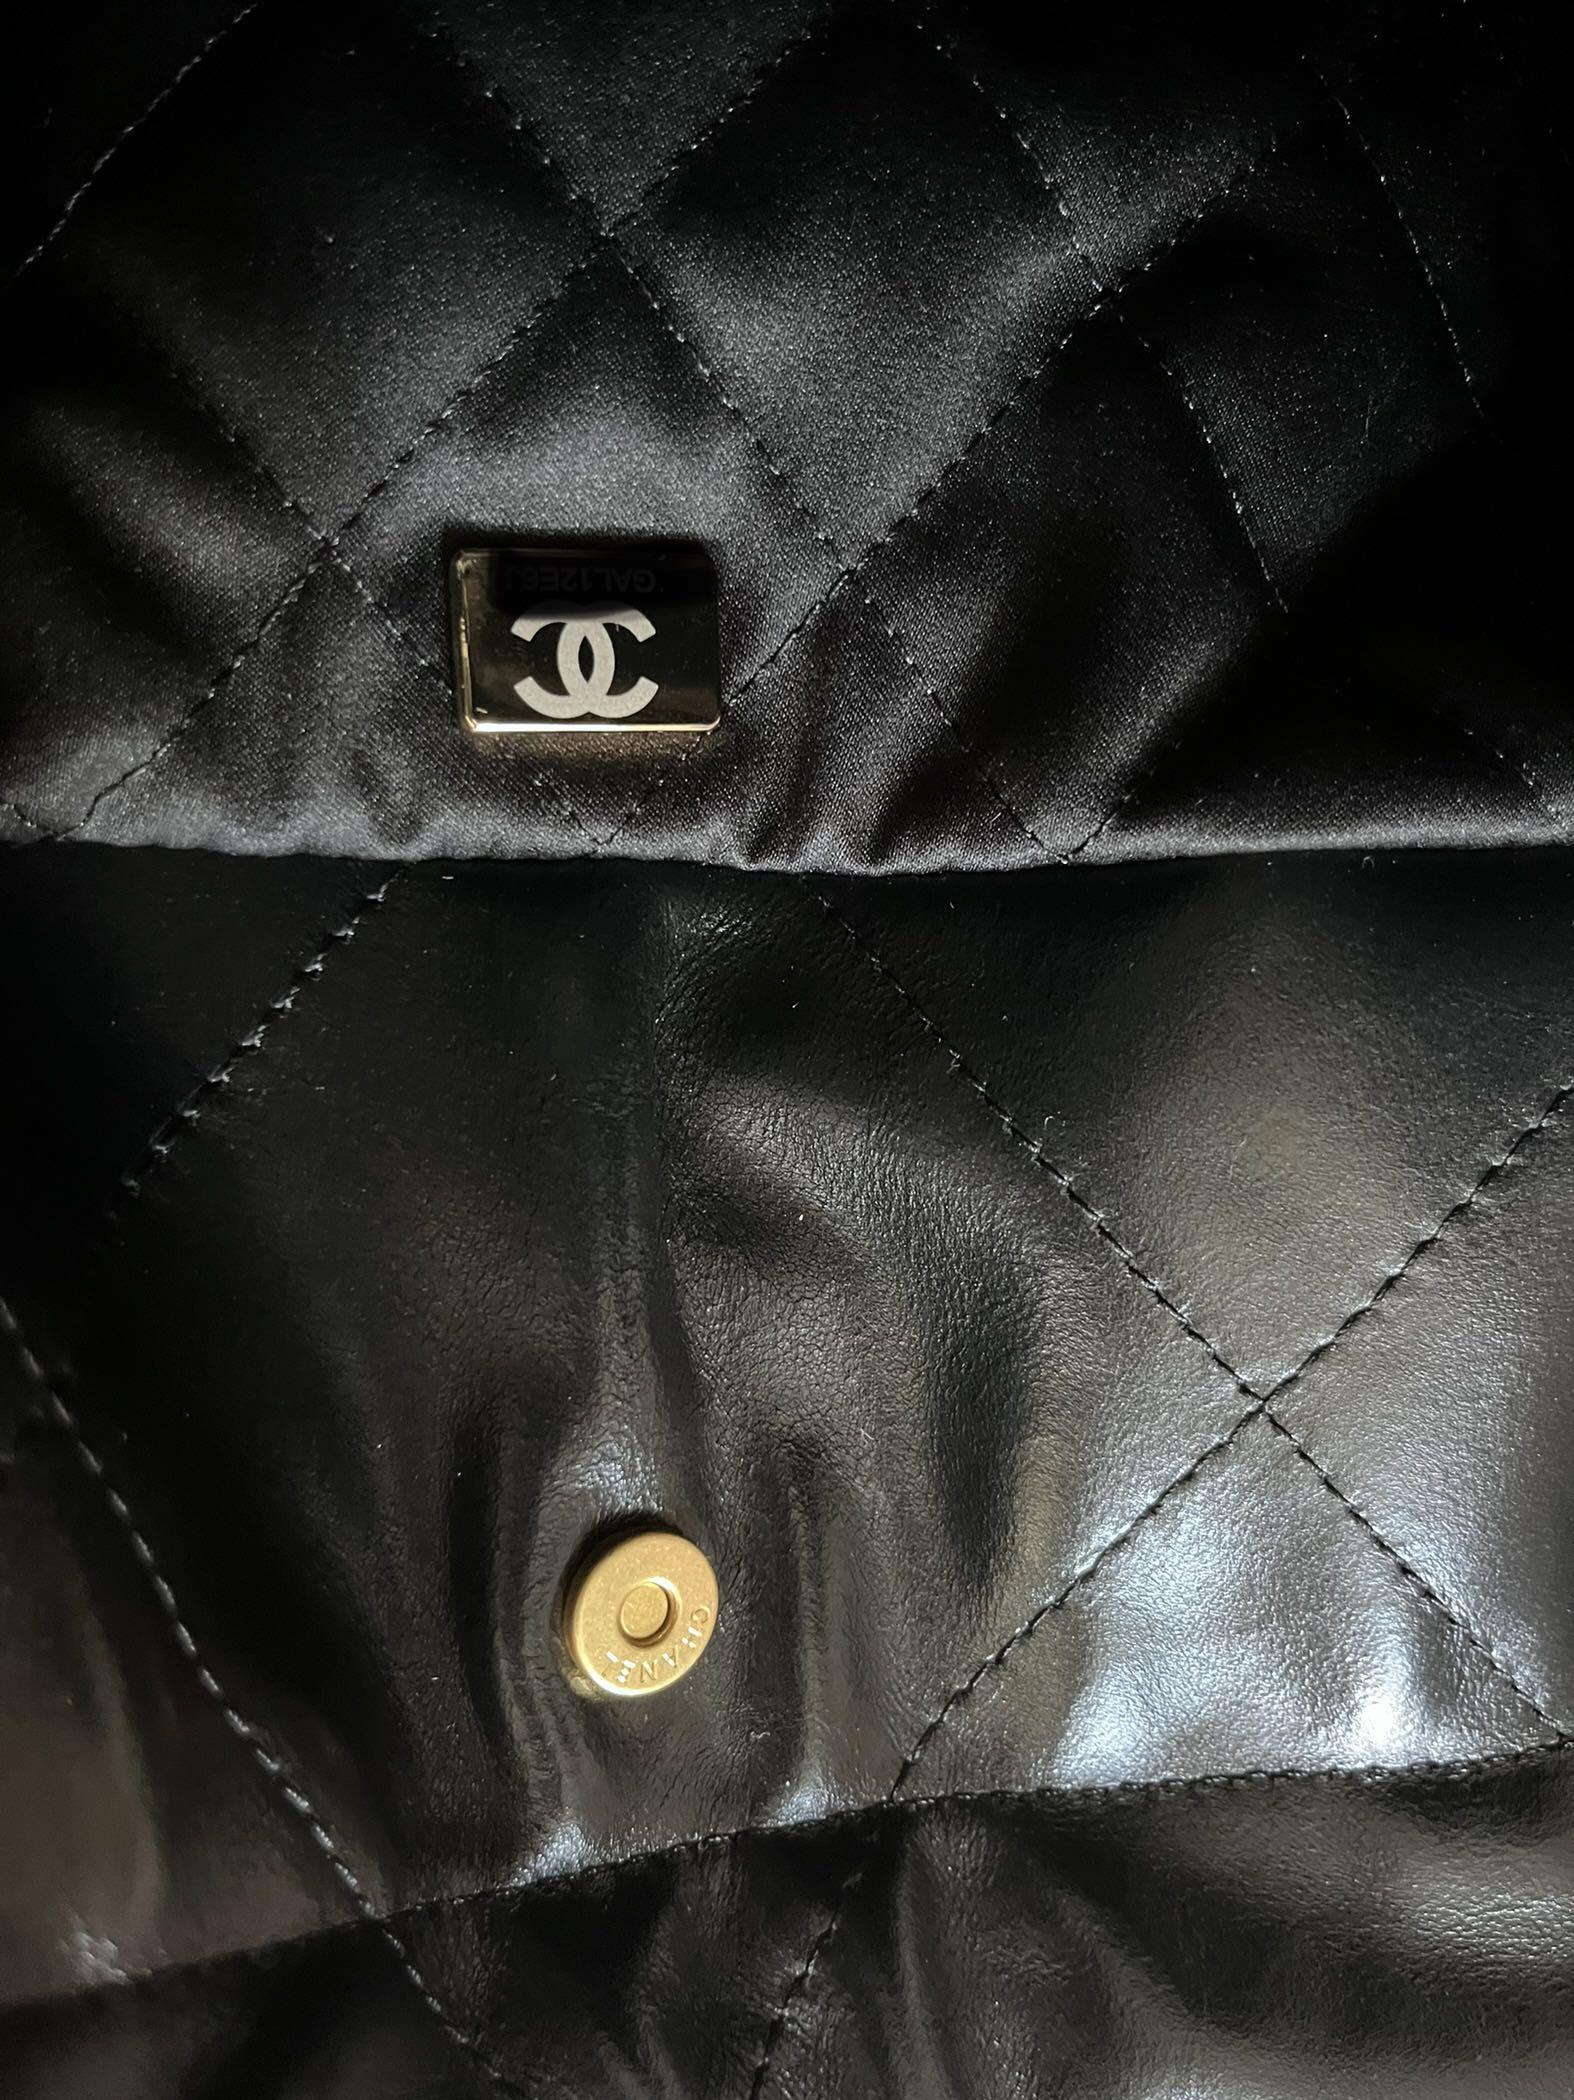 Chanel 22 Handbag in Black Shiny Calfskin & Gold-Tone Metal — UFO No More